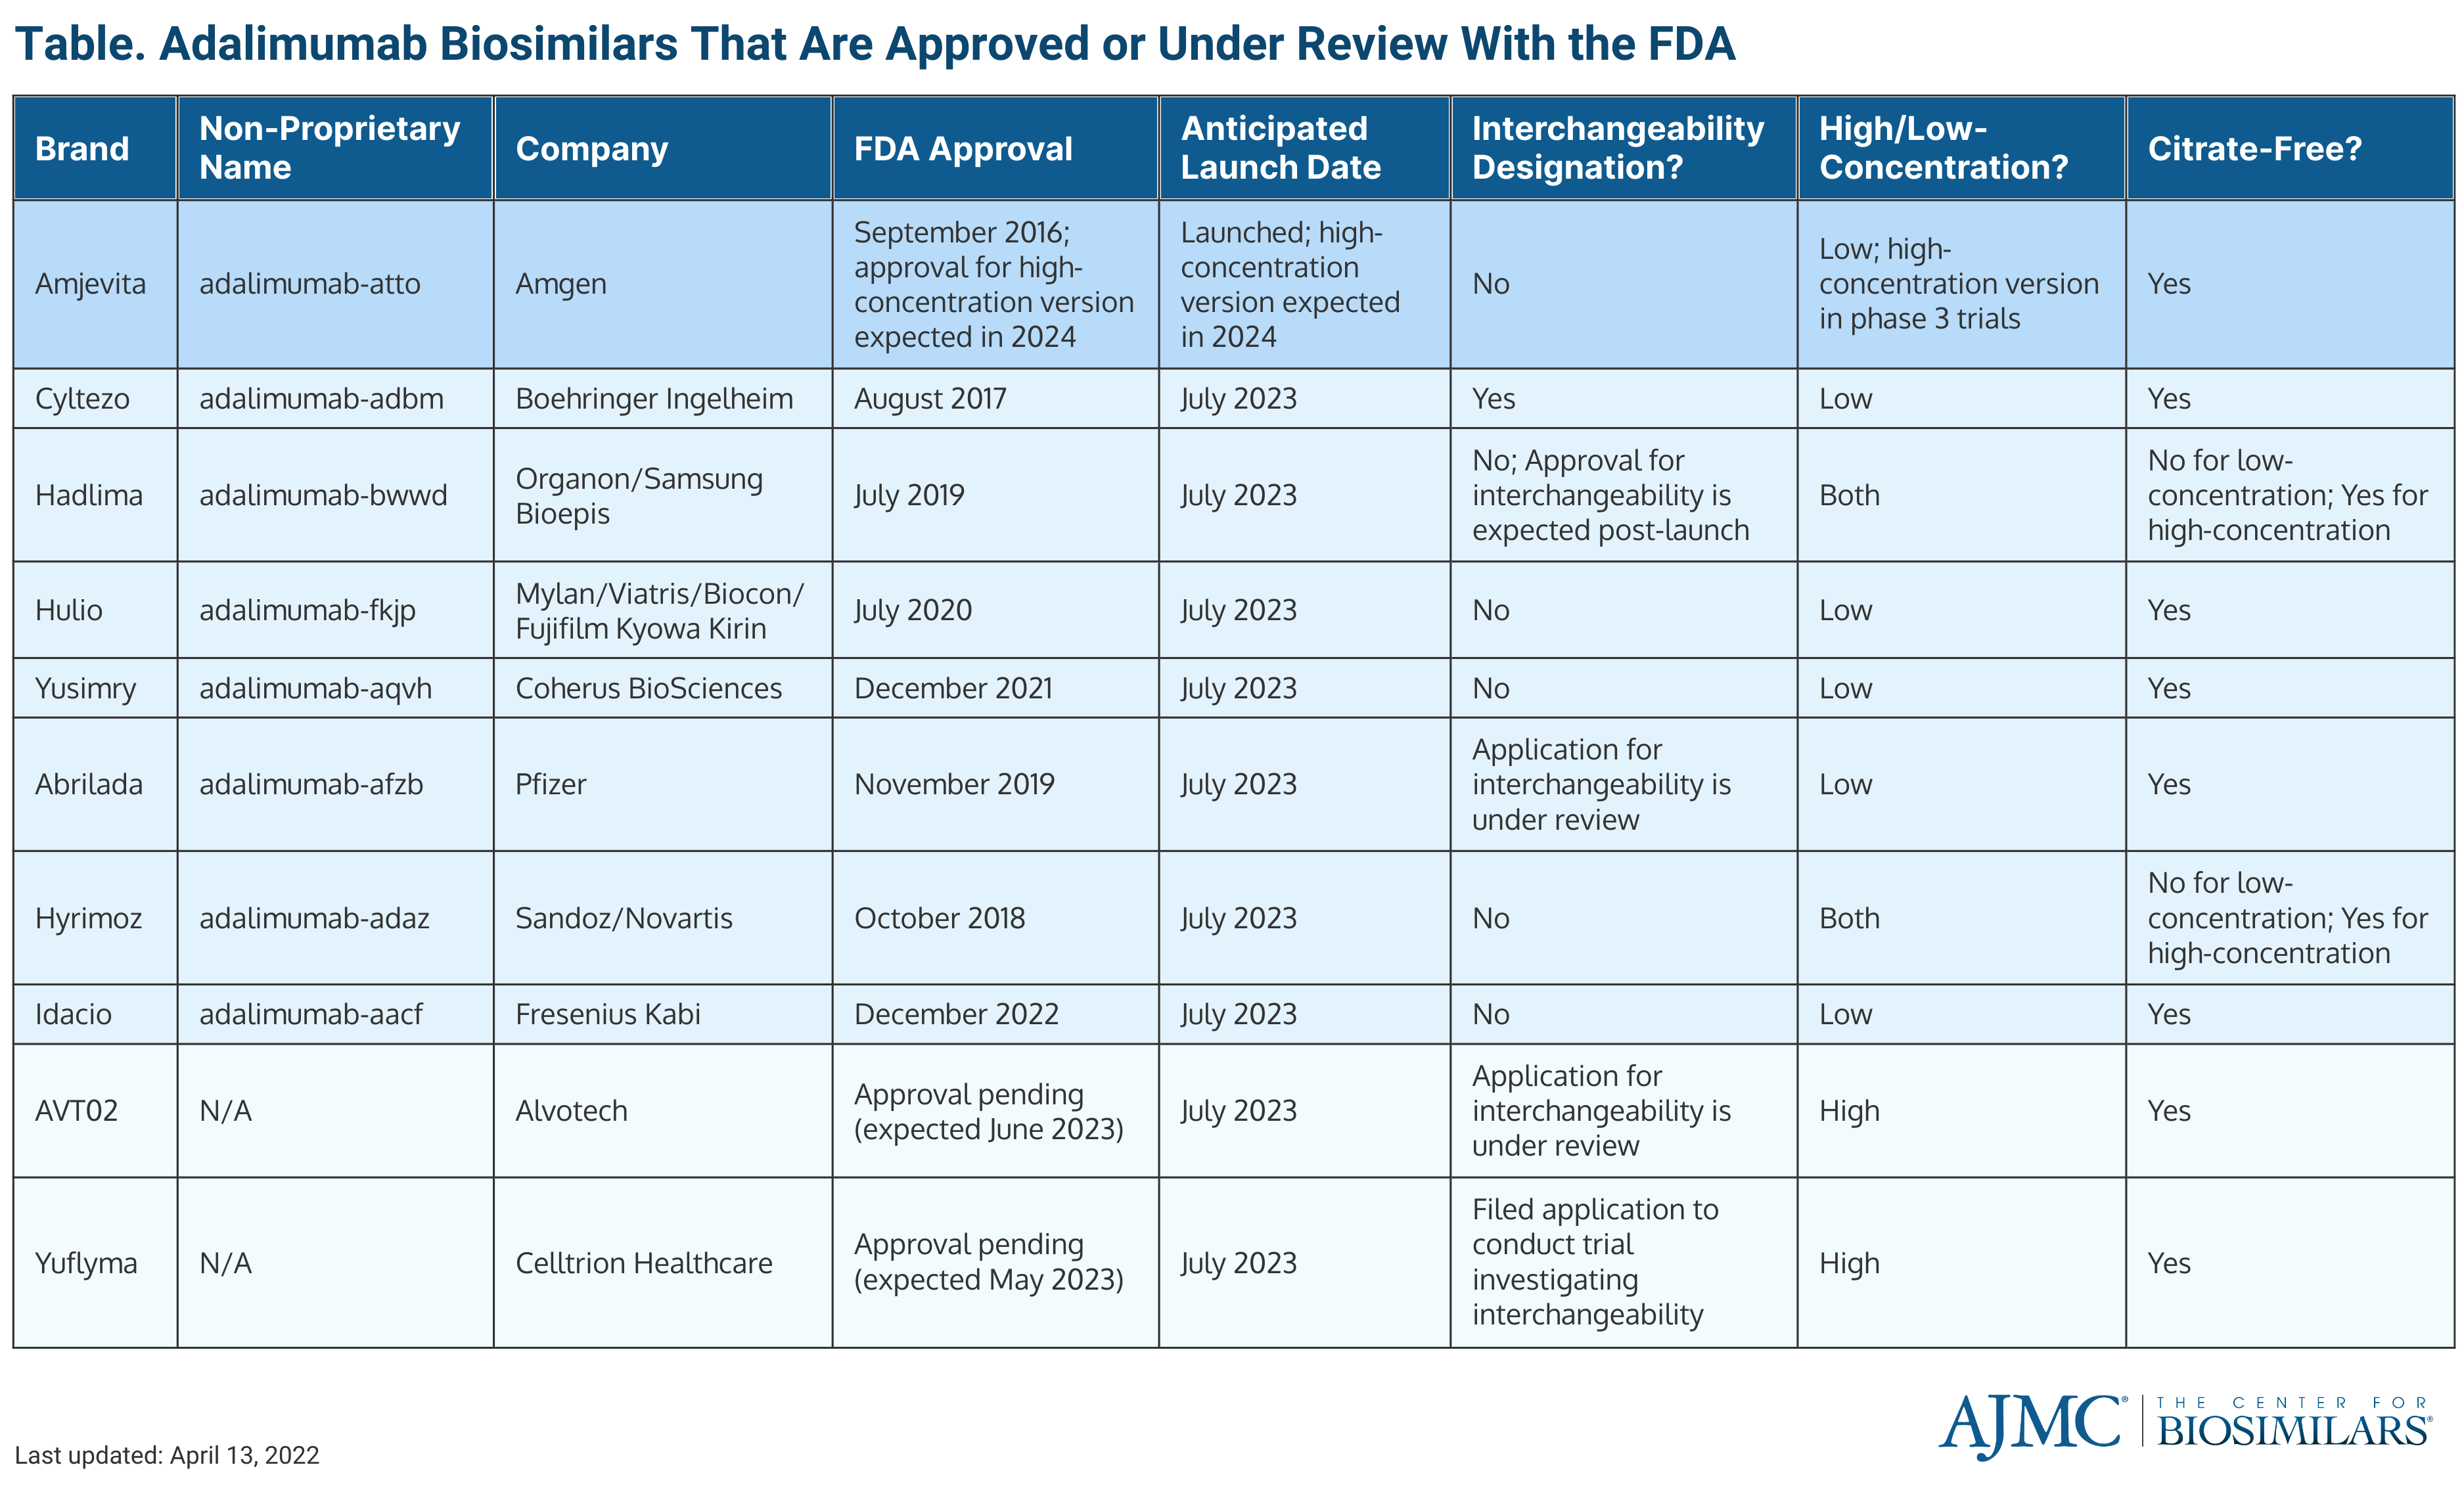 FDA approved adalimumab biosimilars